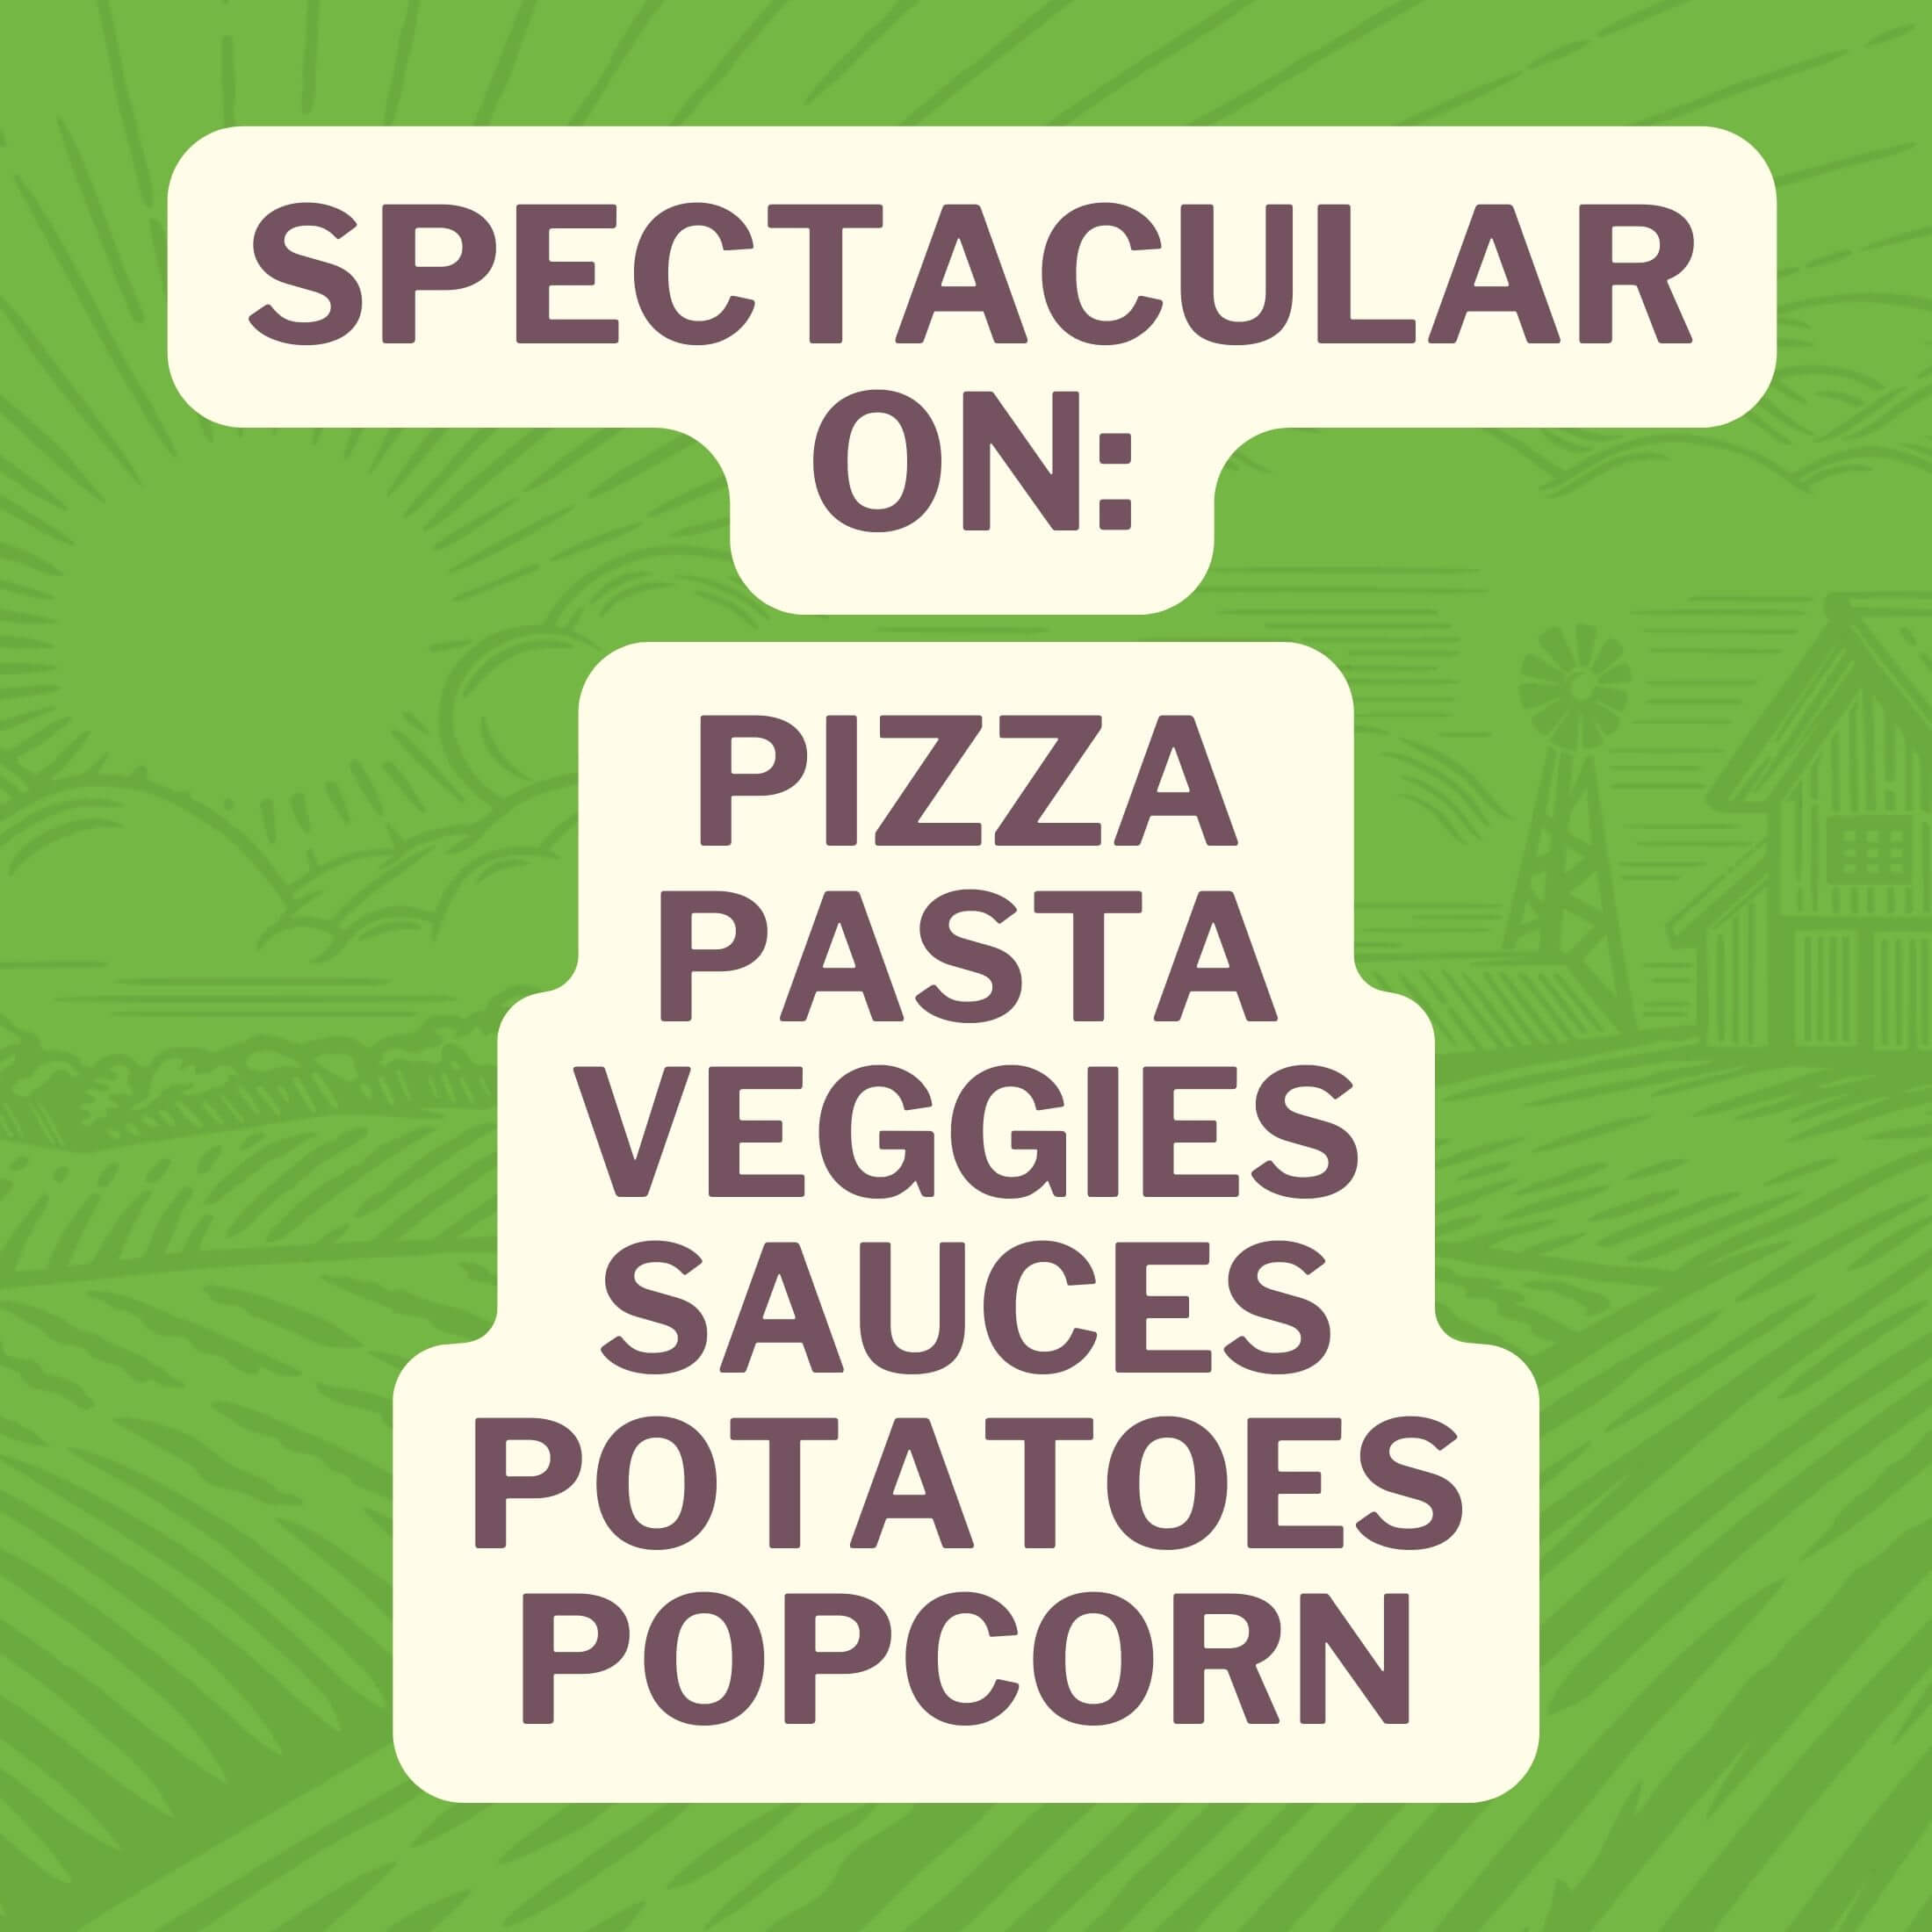 Spectacular On: Pizza Pasta Veggies Sauces Potatoes Popcorn